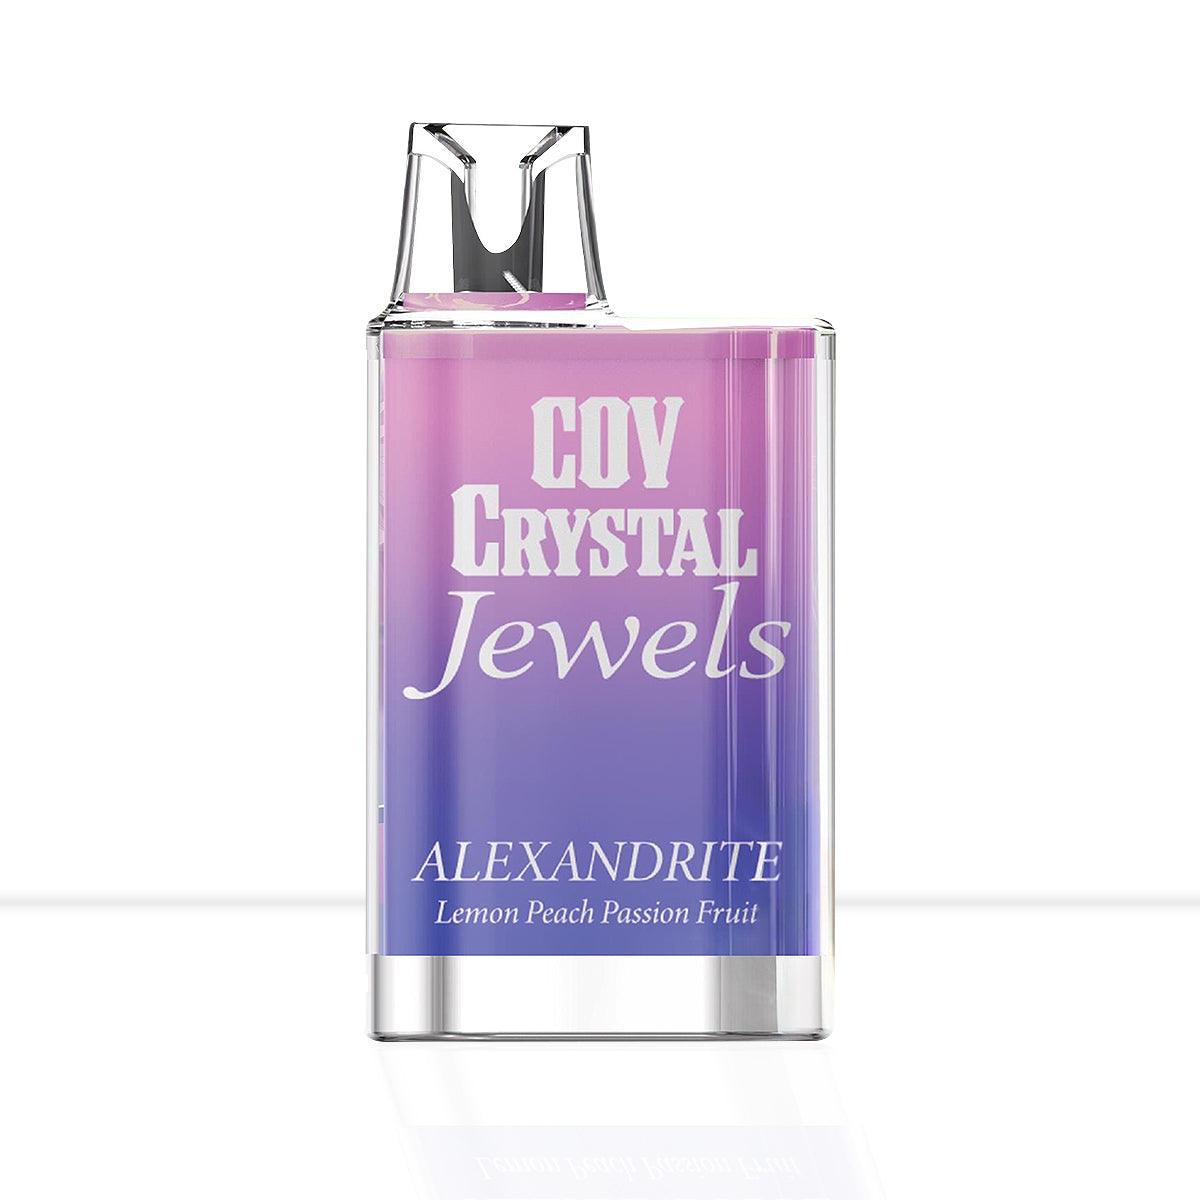 COV Crystal Jewels Lemon Peach Passion Fruit Alexandrite Disposable - COV Crystal Jewels Lemon Peach Passion Fruit Alexandrite Disposable - Vape Kits